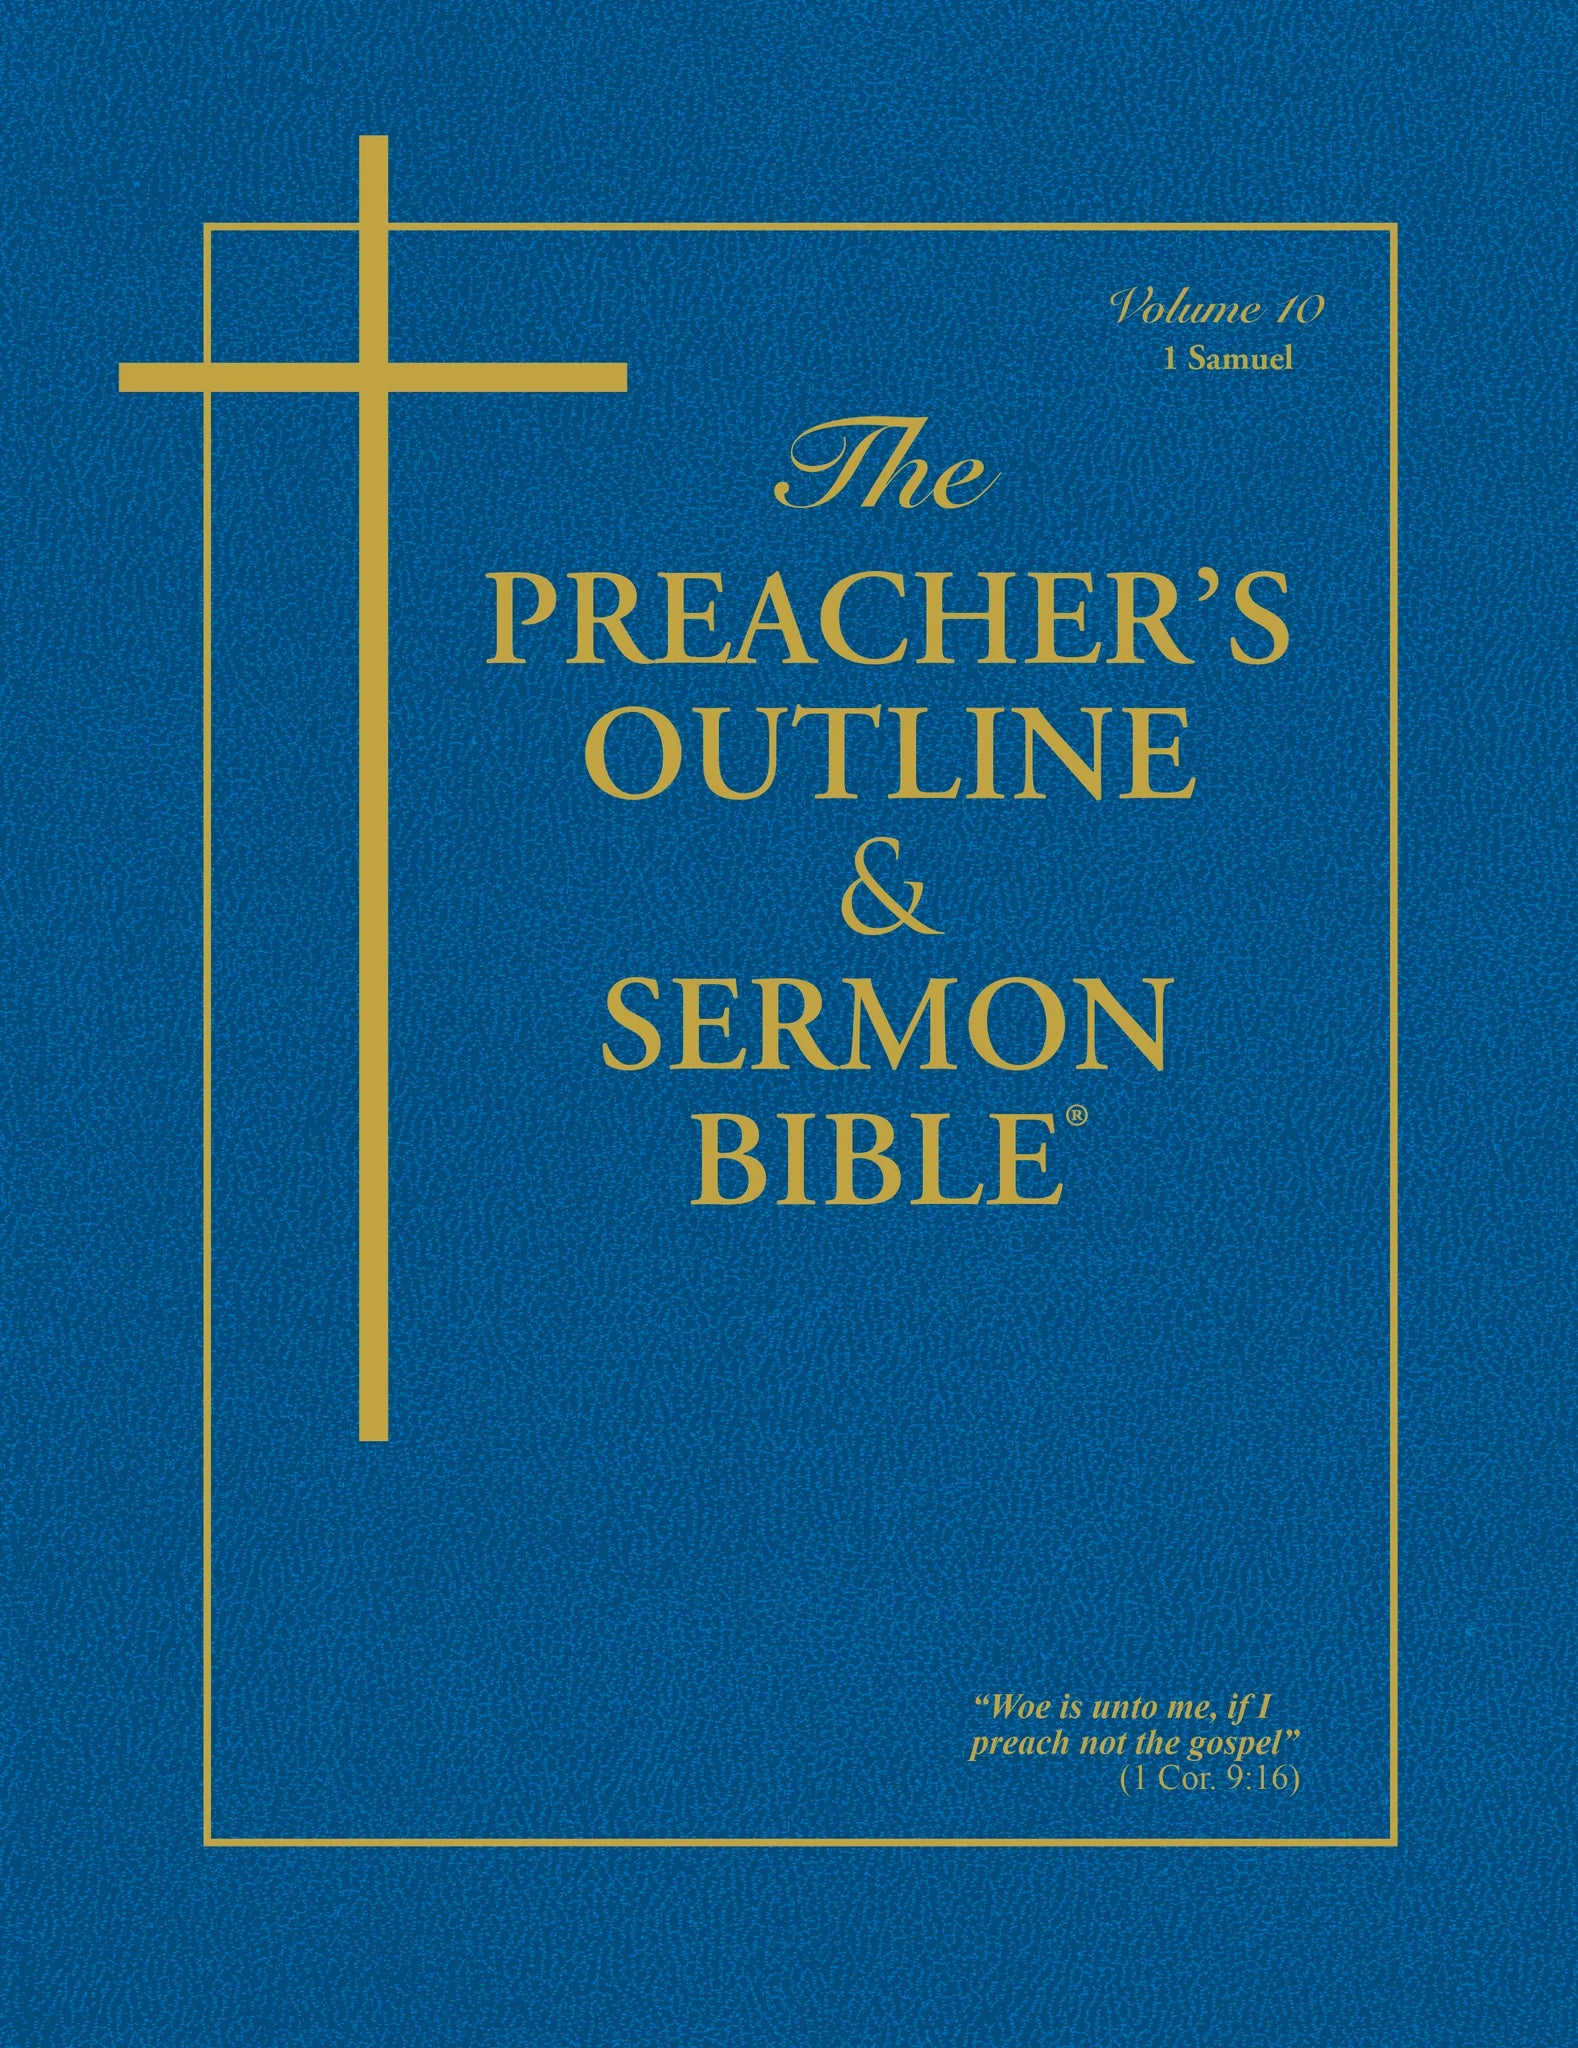 The Preacher's Outline & Sermon Bible - Vol. 10: 1 Samuel (King James Version)